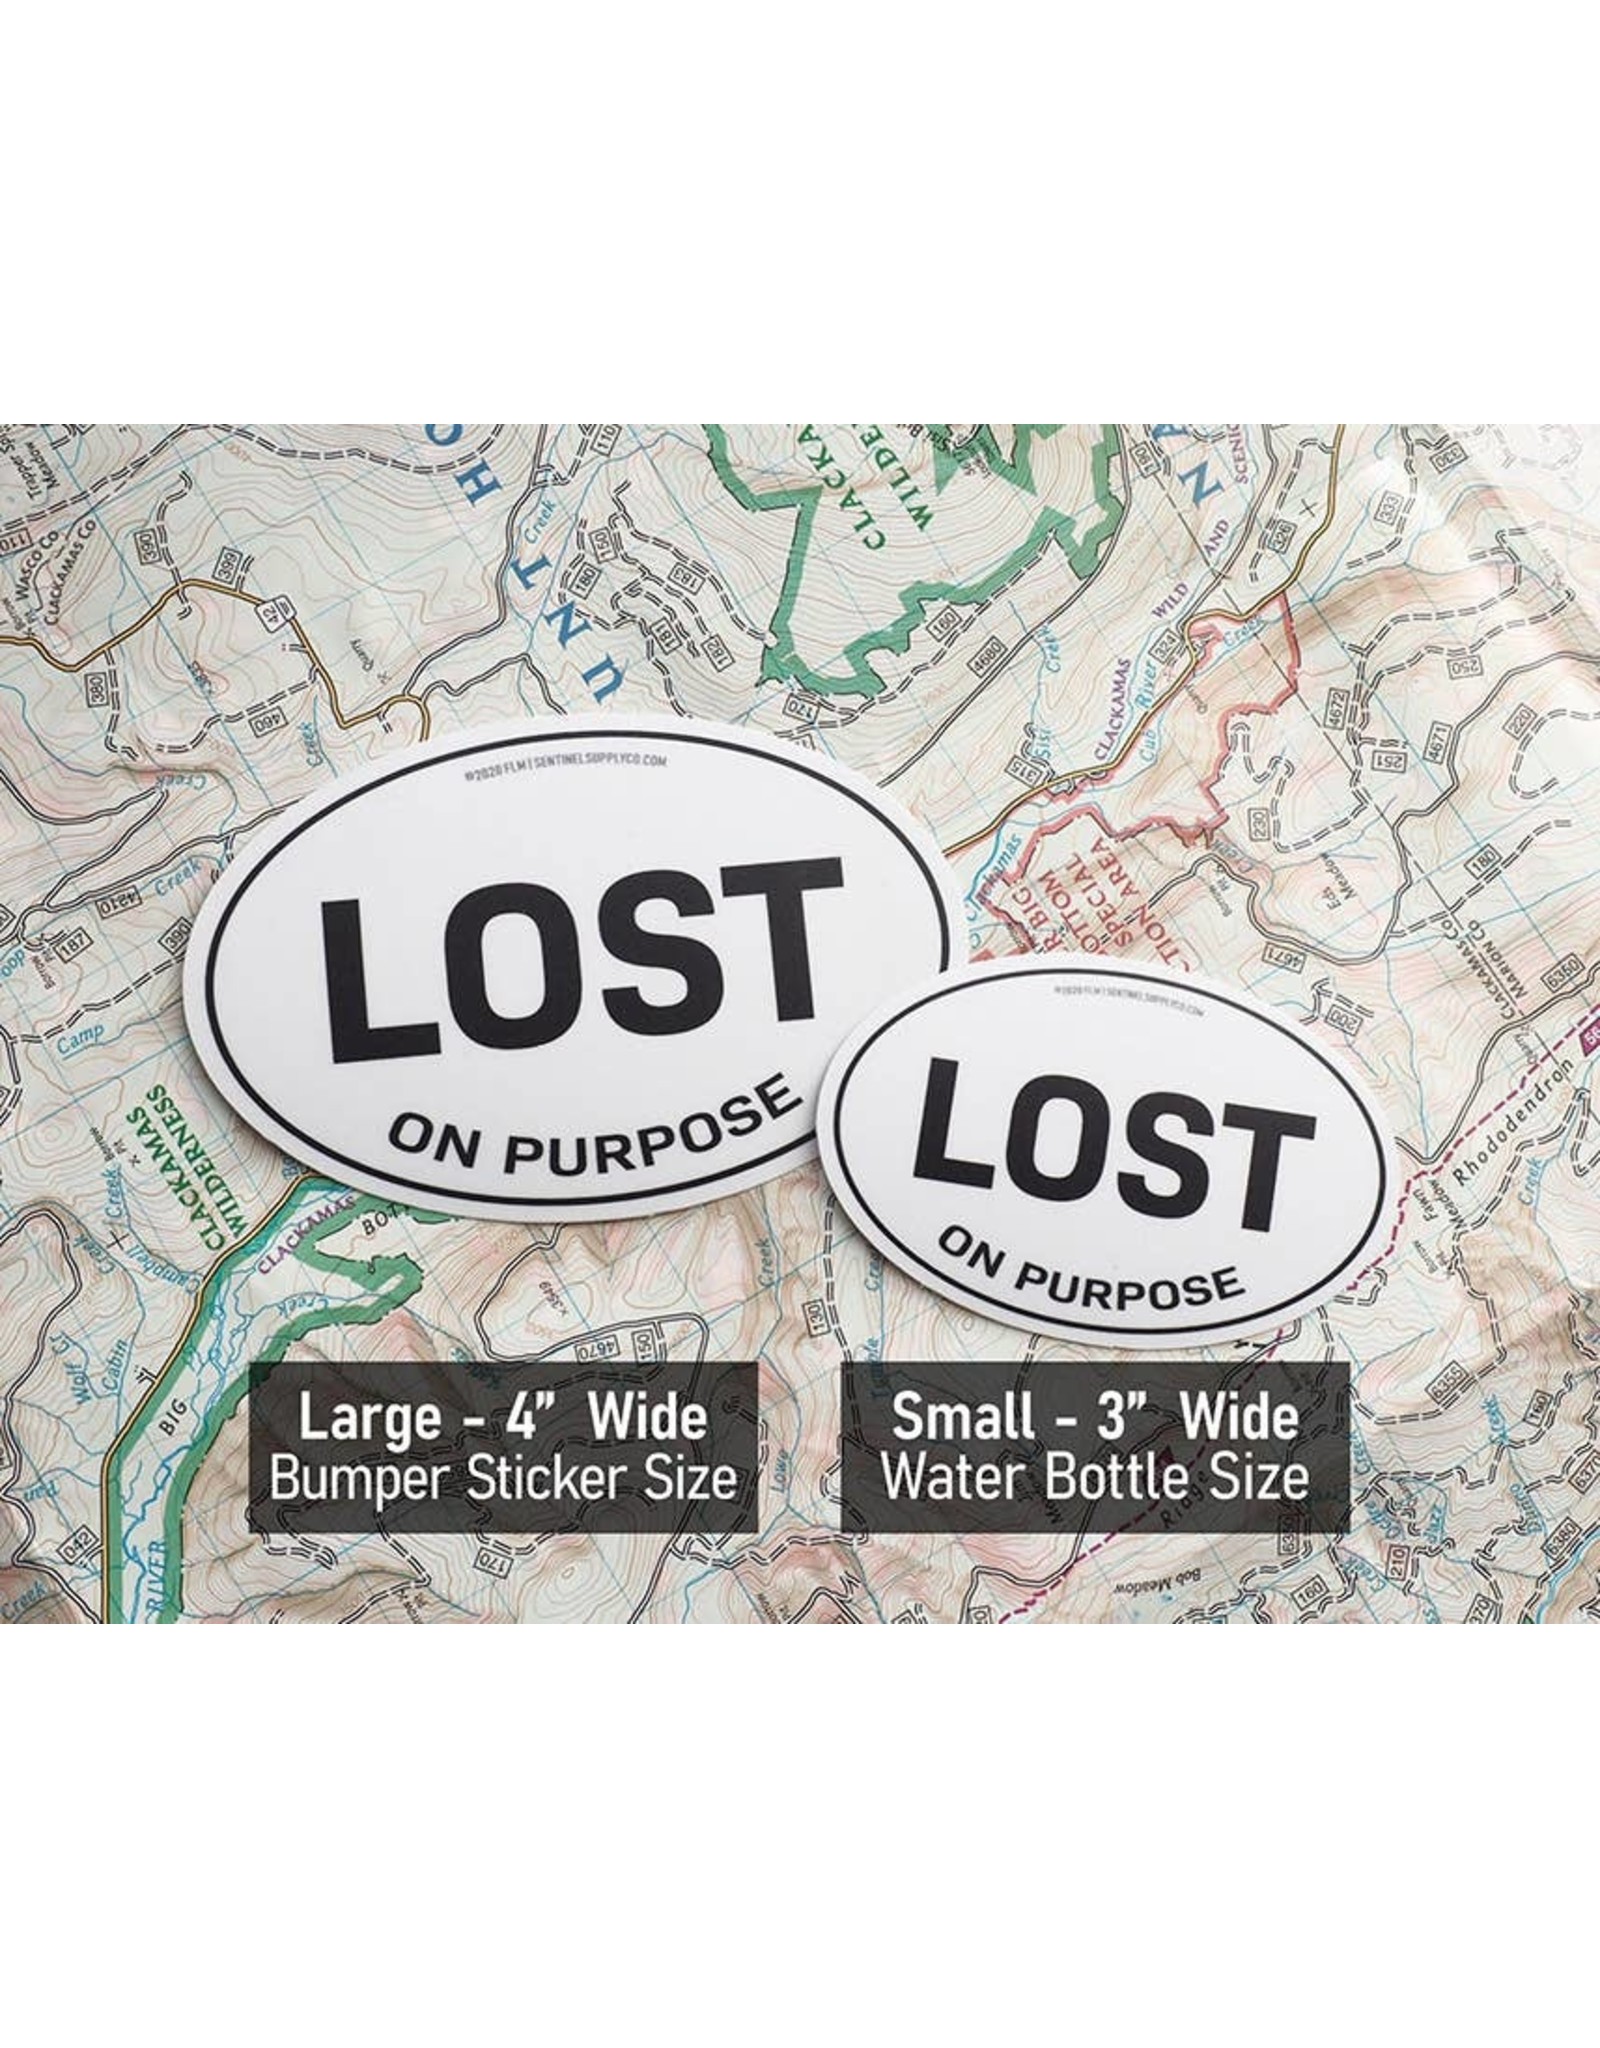 Sentinal Supply Lost on Purpose Oval Bumper Sticker, Outdoor Adventure Decal  Lg Bumper Sticker Size - 4"